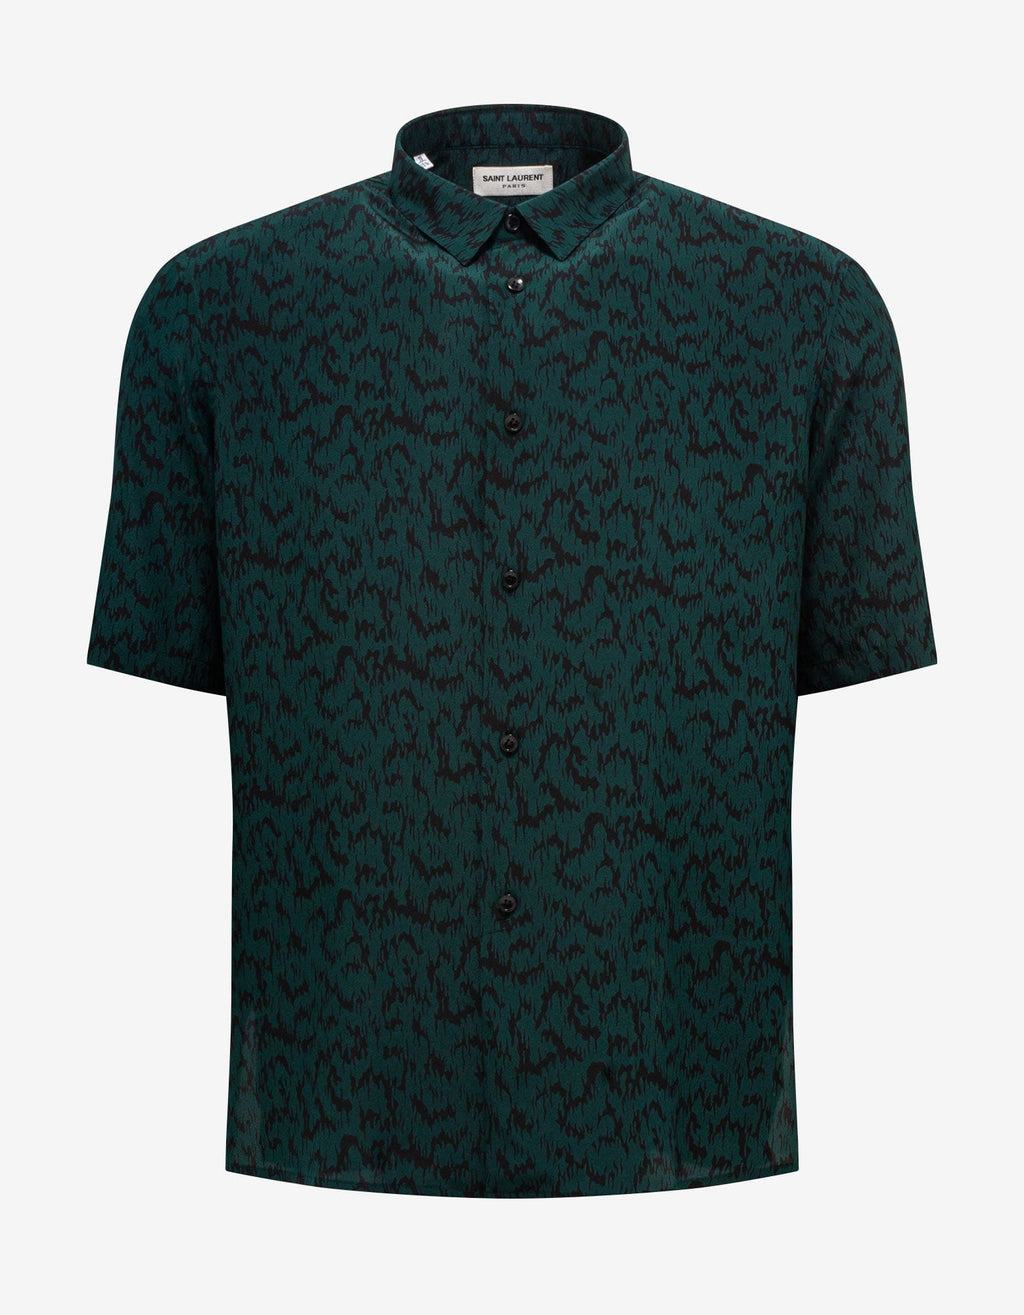 Saint Laurent Saint Laurent Green Printed Silk Shirt